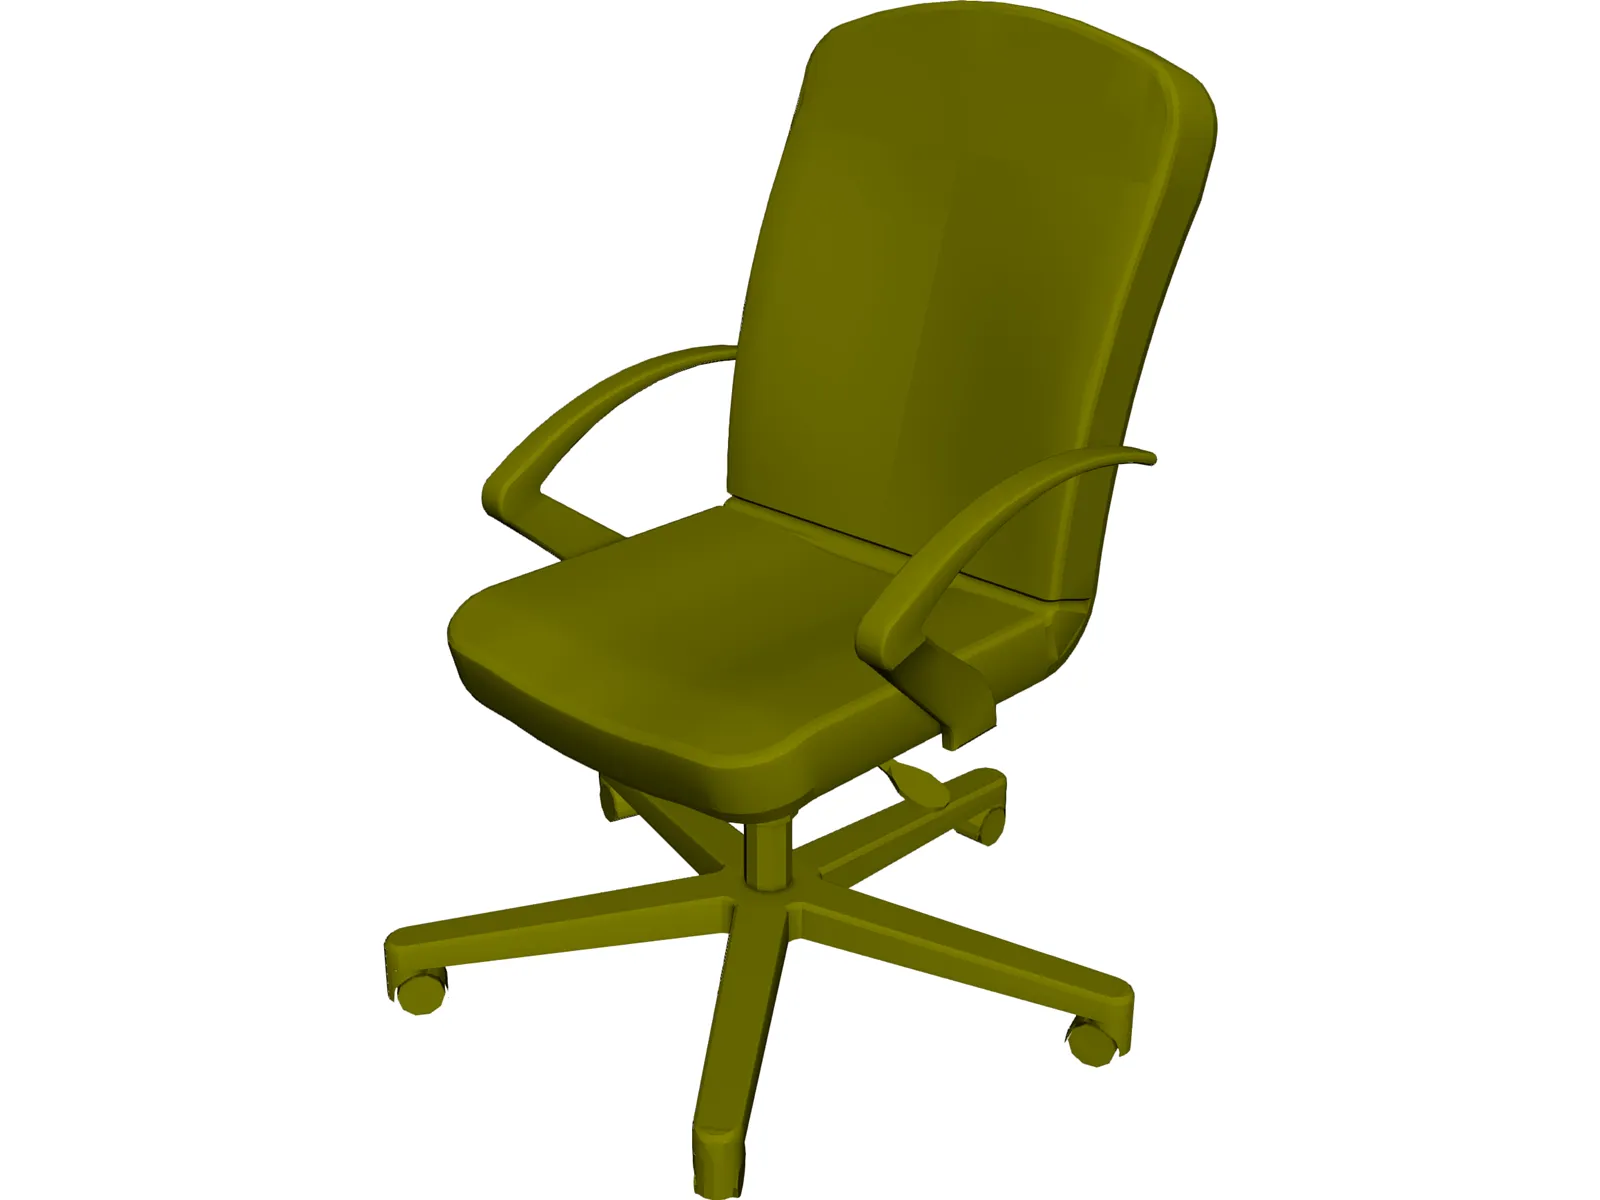 Allsteel Chair 10 3D Model